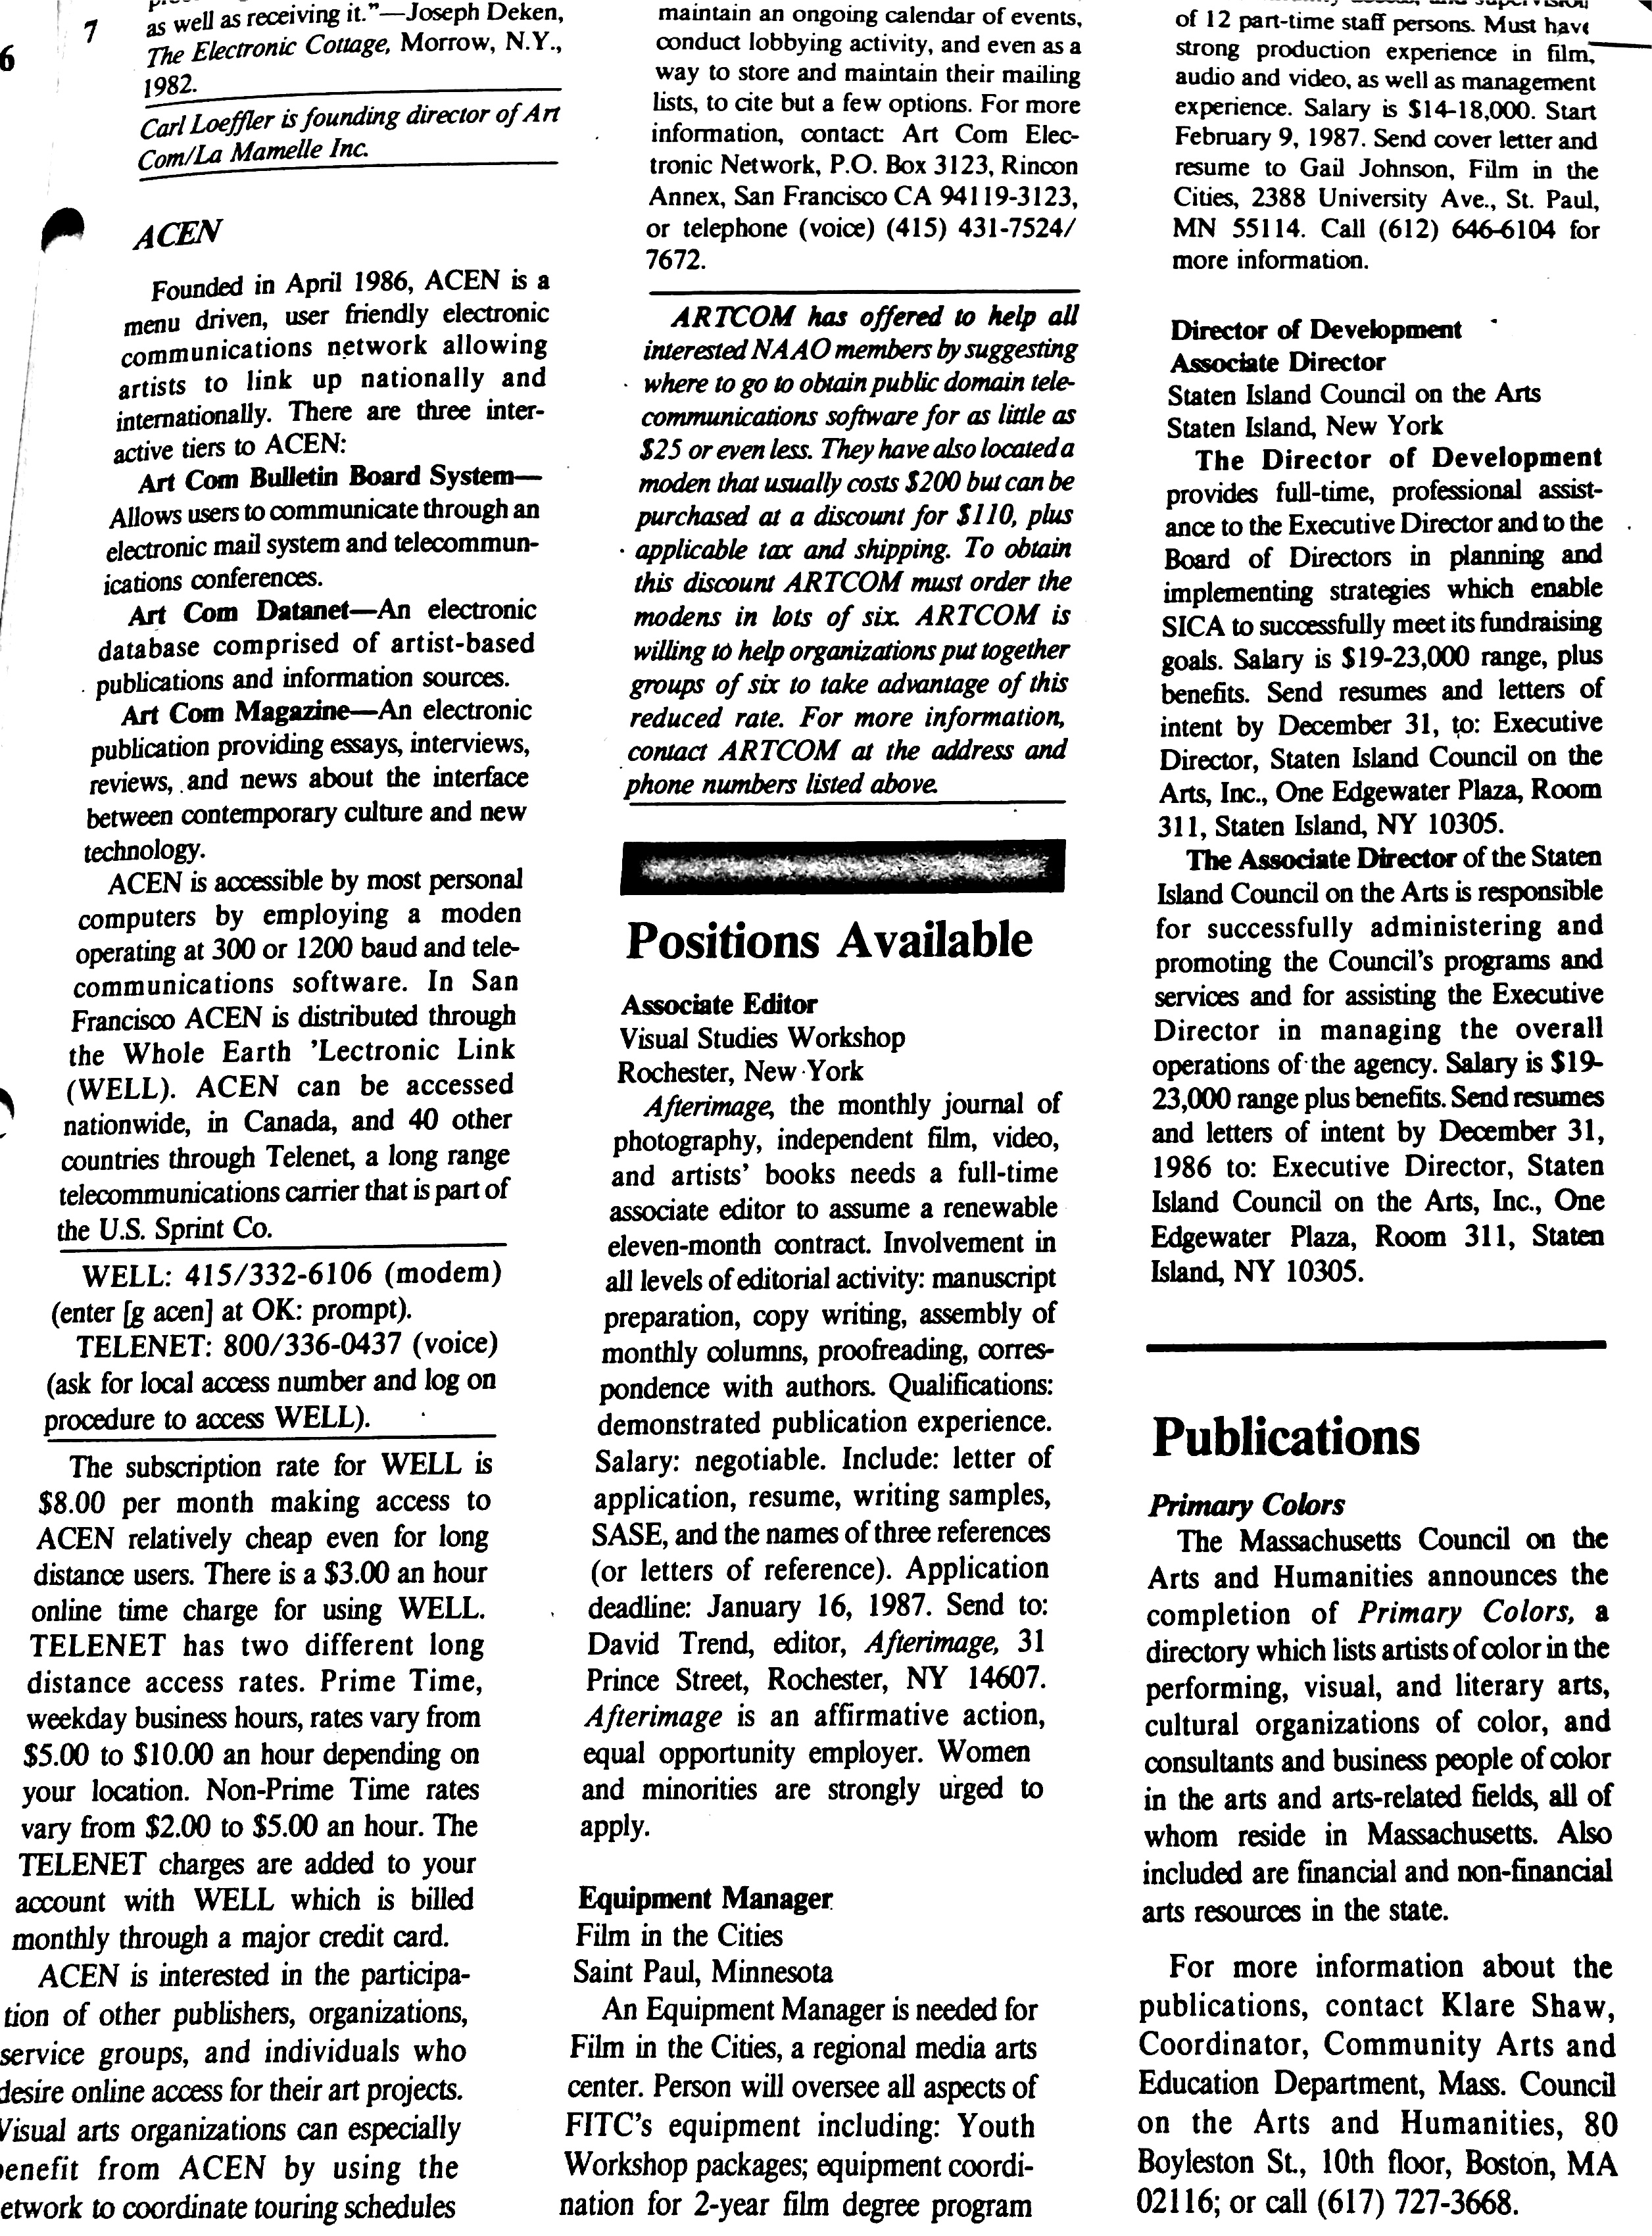 November-December 1986 - NAAO Bulletin Page 8 (1).jpg